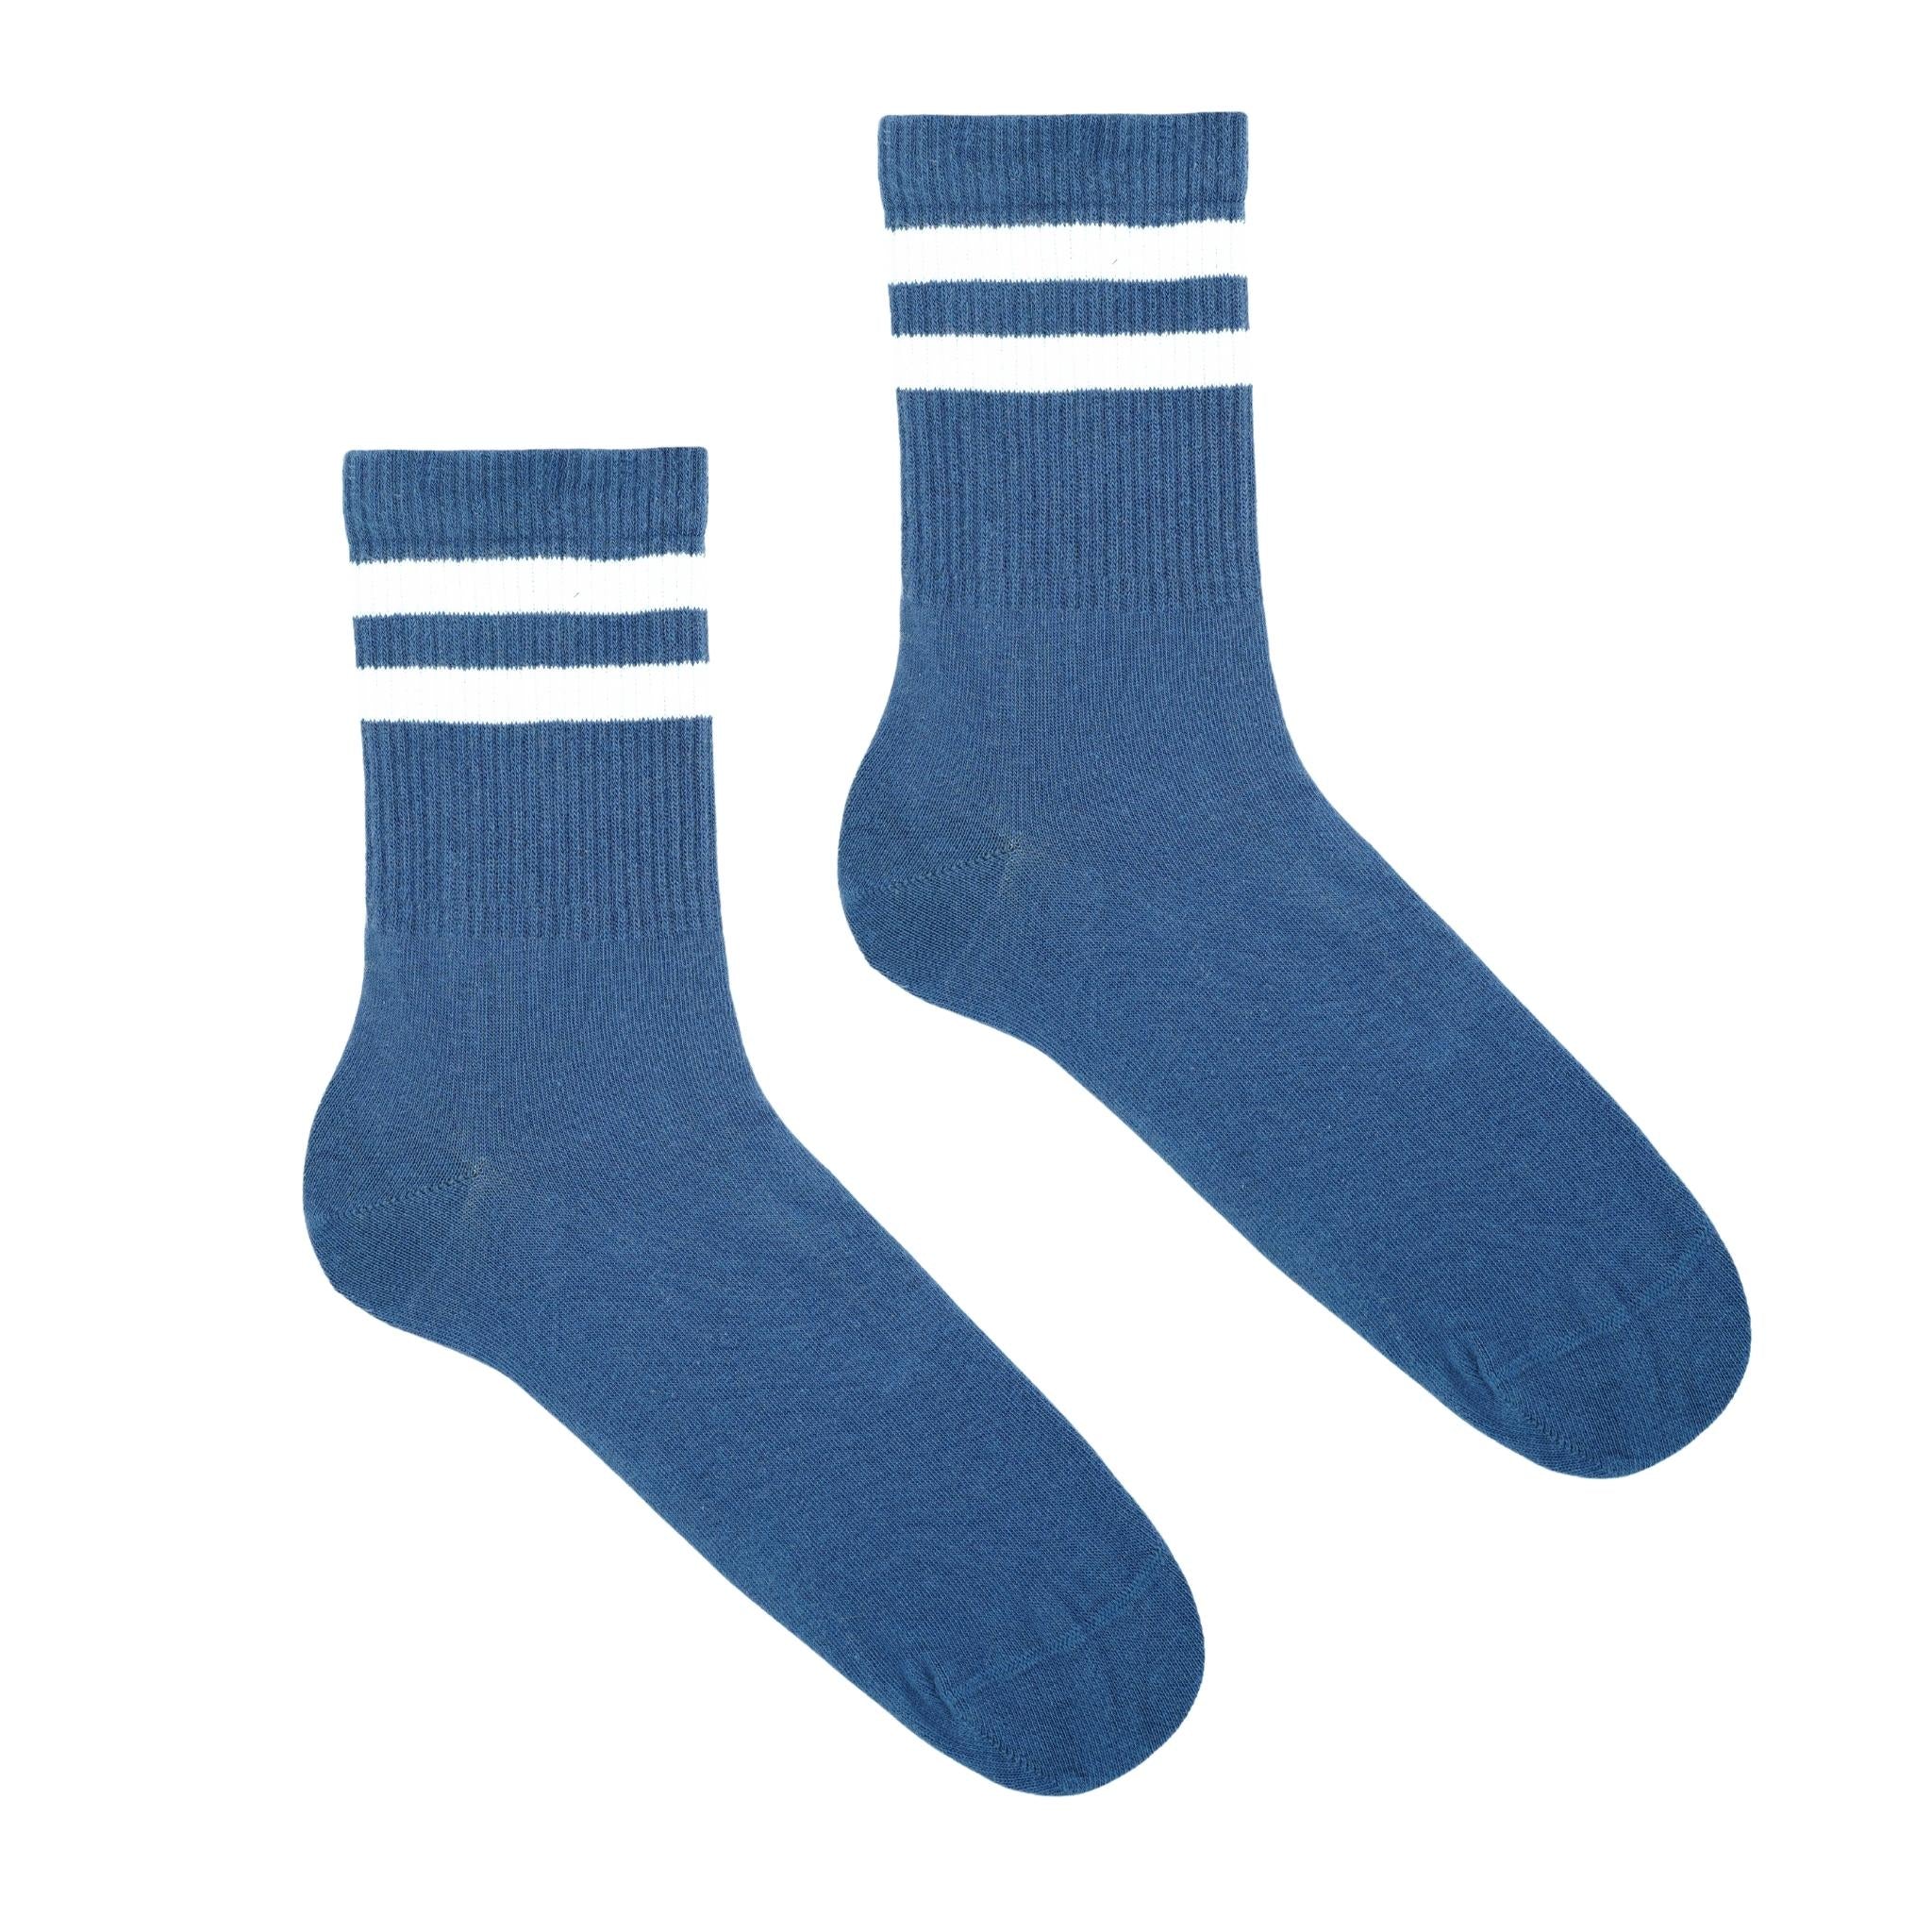 KLUE ORGANIC COTTON TENNIS SOCKS |  BLUE AND WHITE